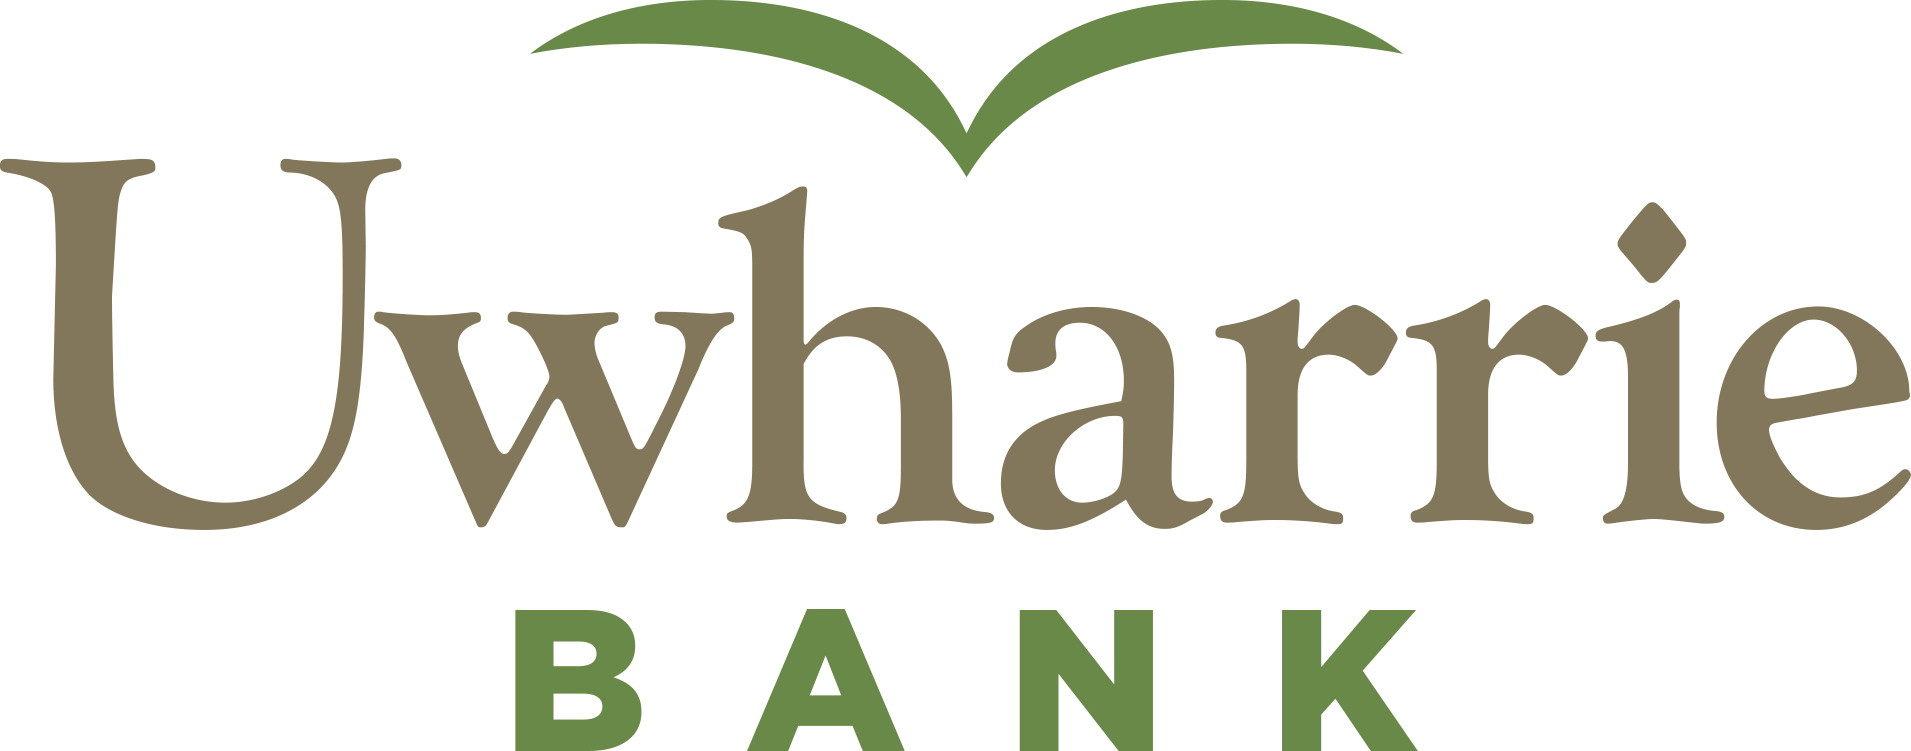 uwharrie bank logo